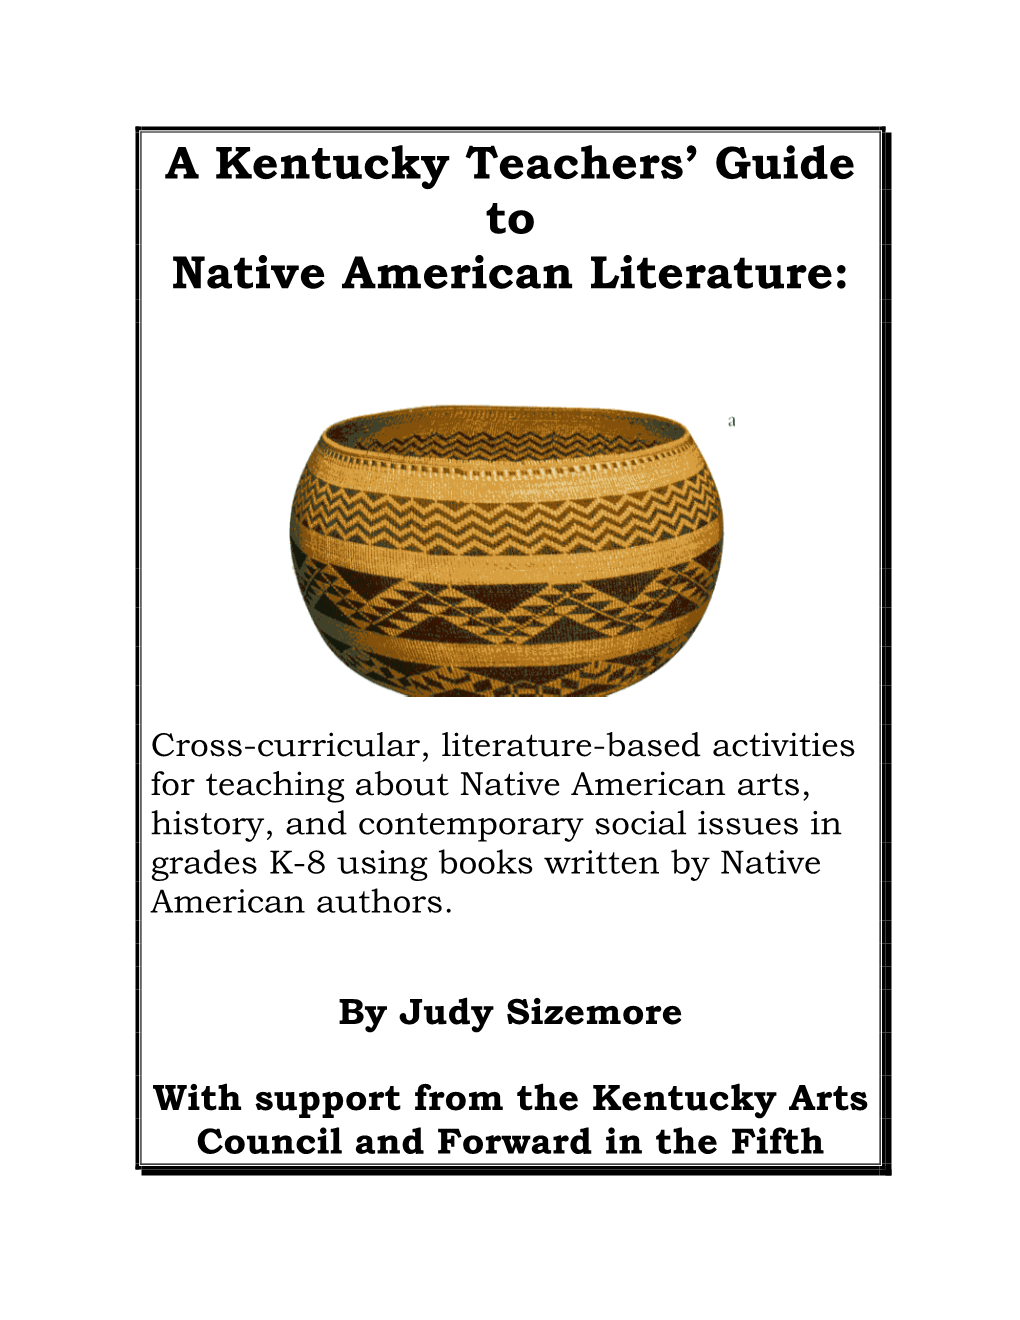 A Kentucky Teachers' Guide to Native American Literature